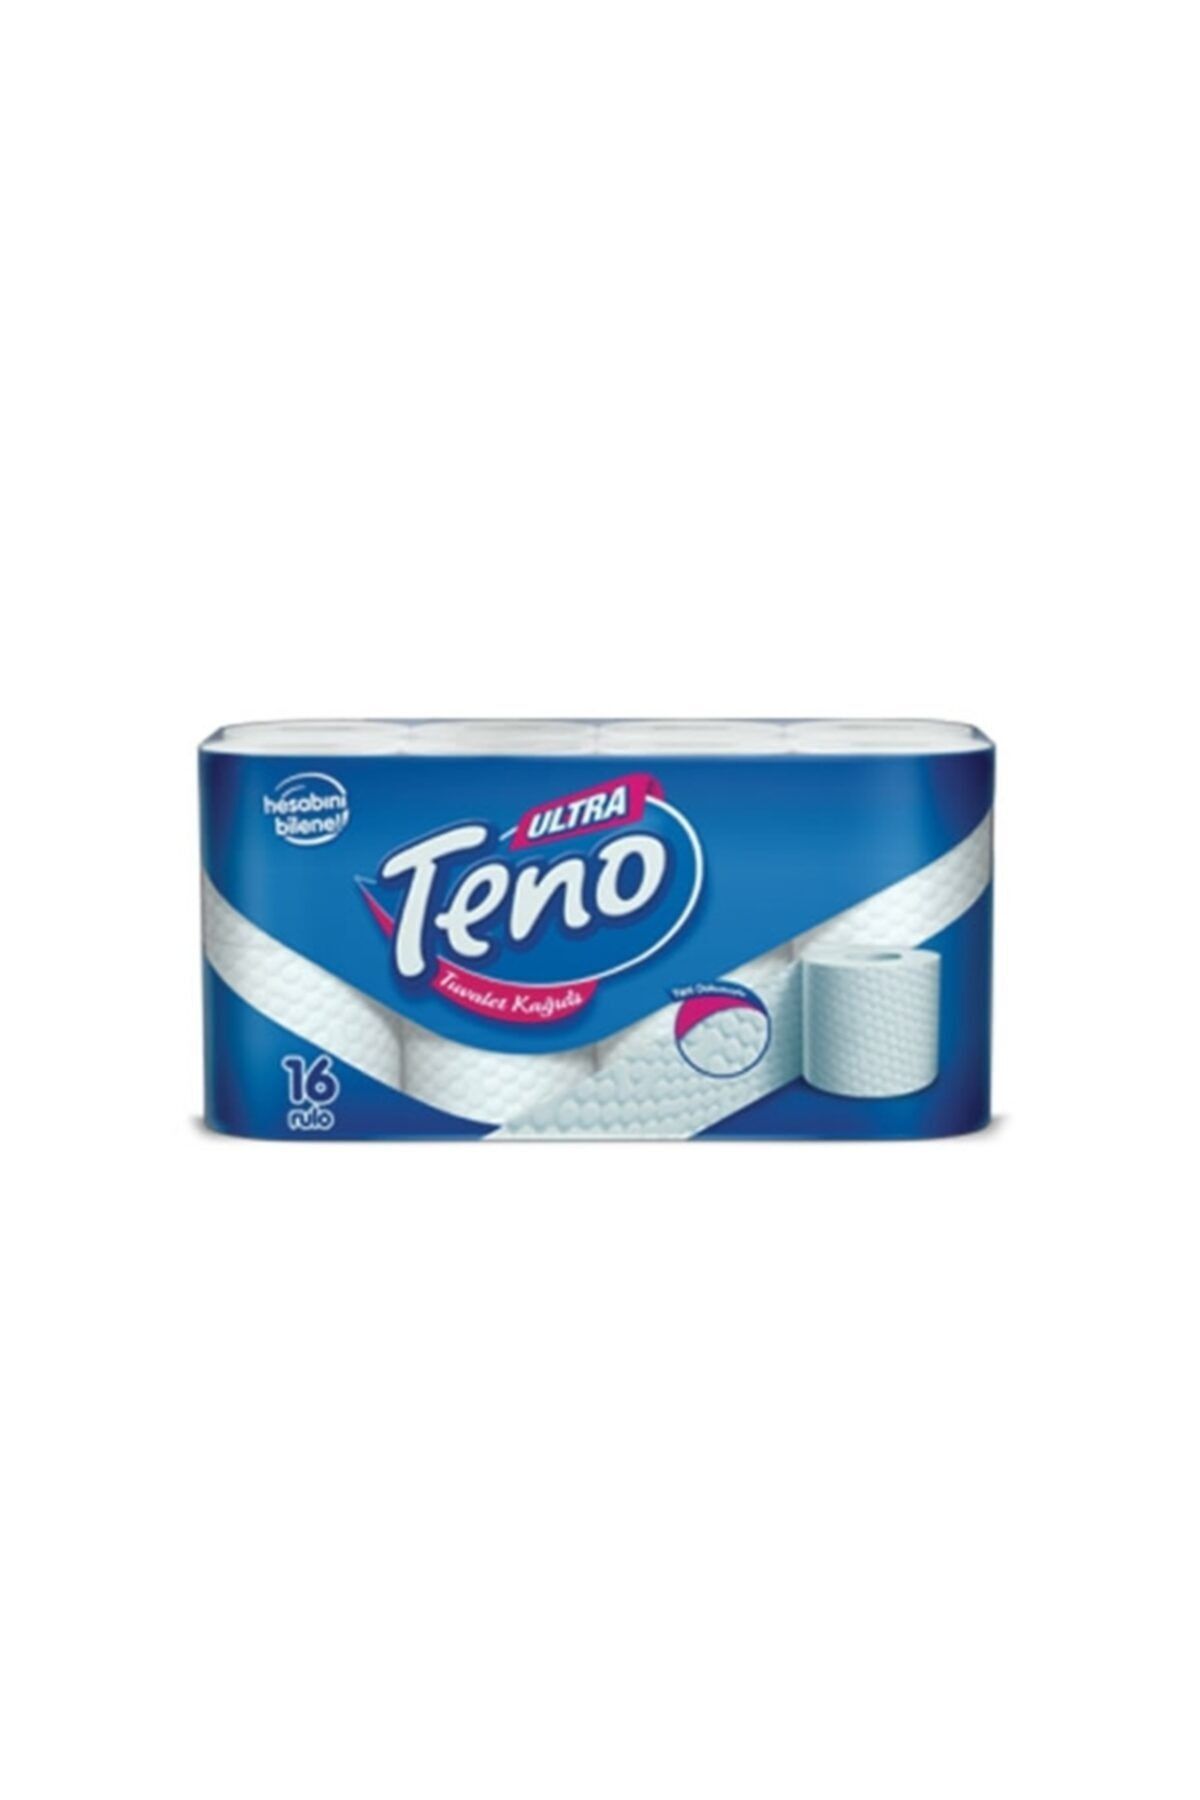 Teno Tuvalet Kağıdı 16'lı-3'lü